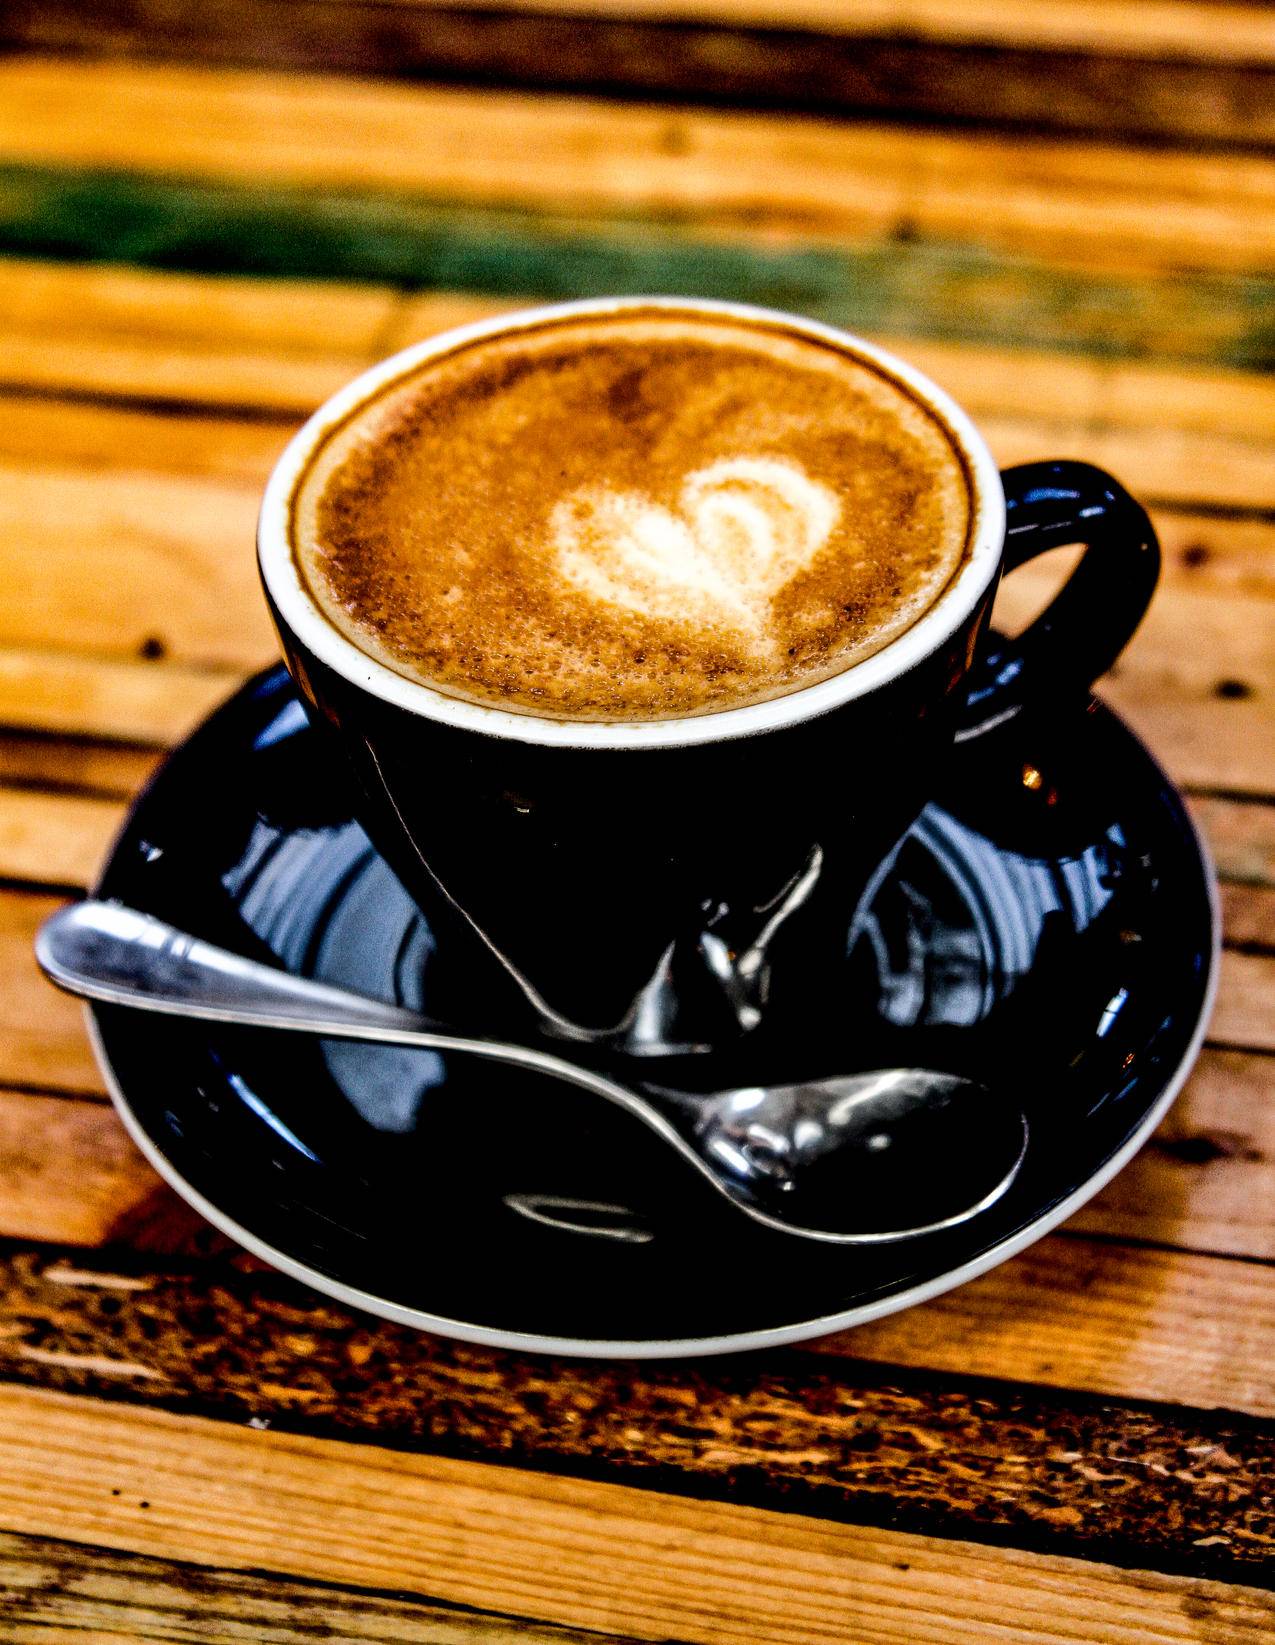 cc0可商用咖啡因图片,咖啡,杯子,杯子